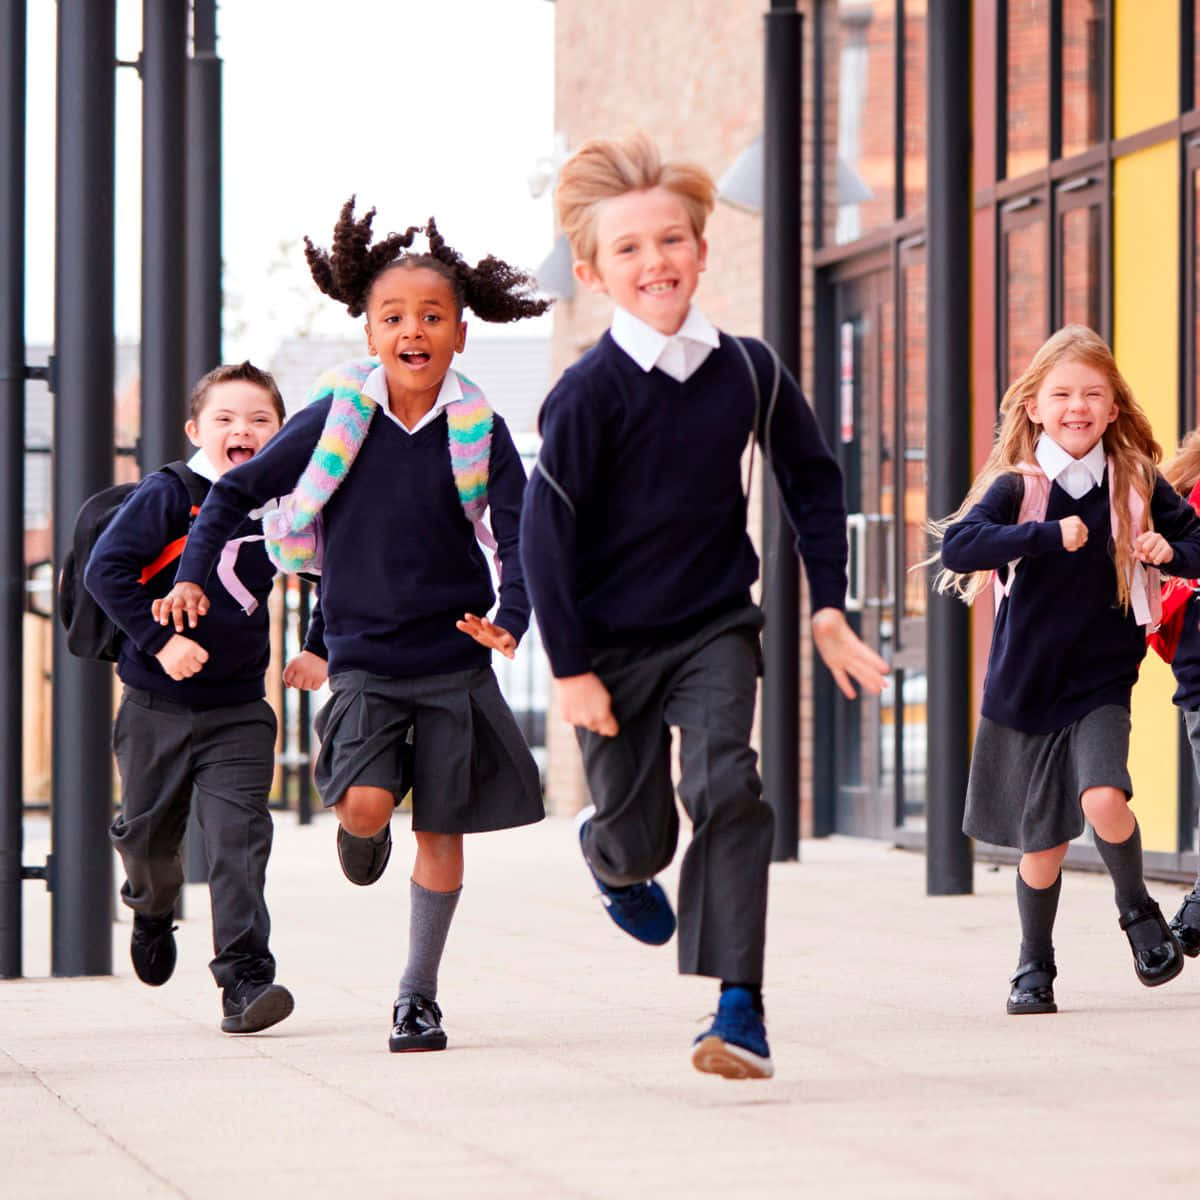 A Group Of Children Running In School Uniforms